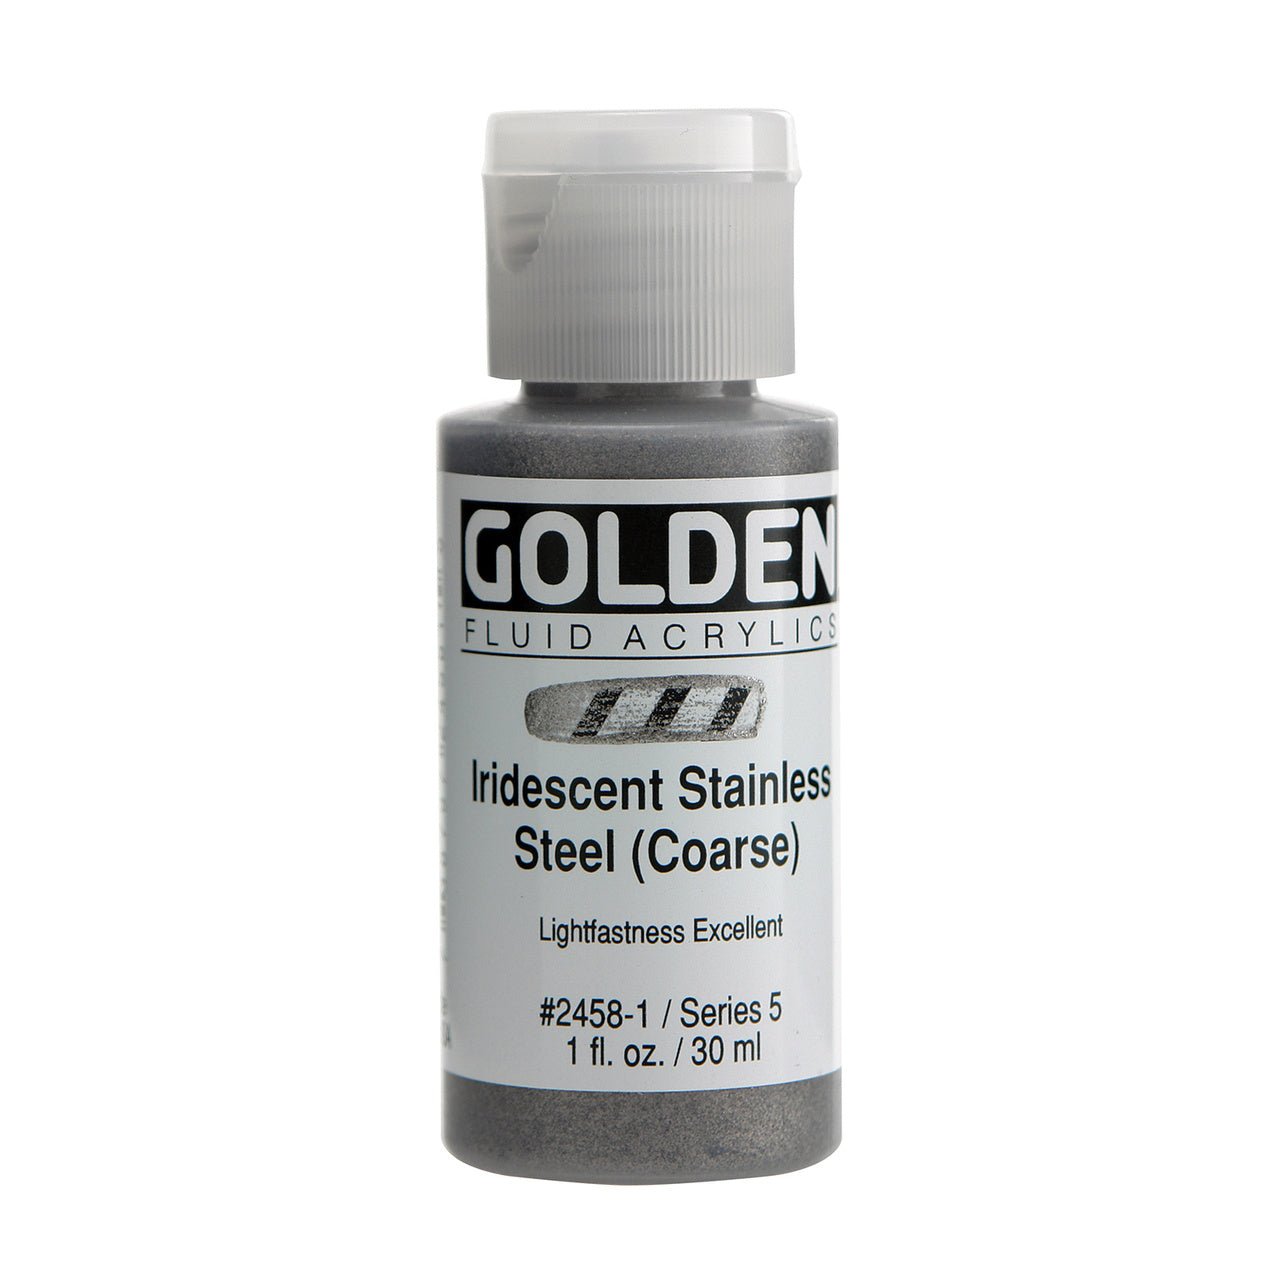 Golden Fluid Acrylic Iridescent Stainless Steel 1 oz - merriartist.com